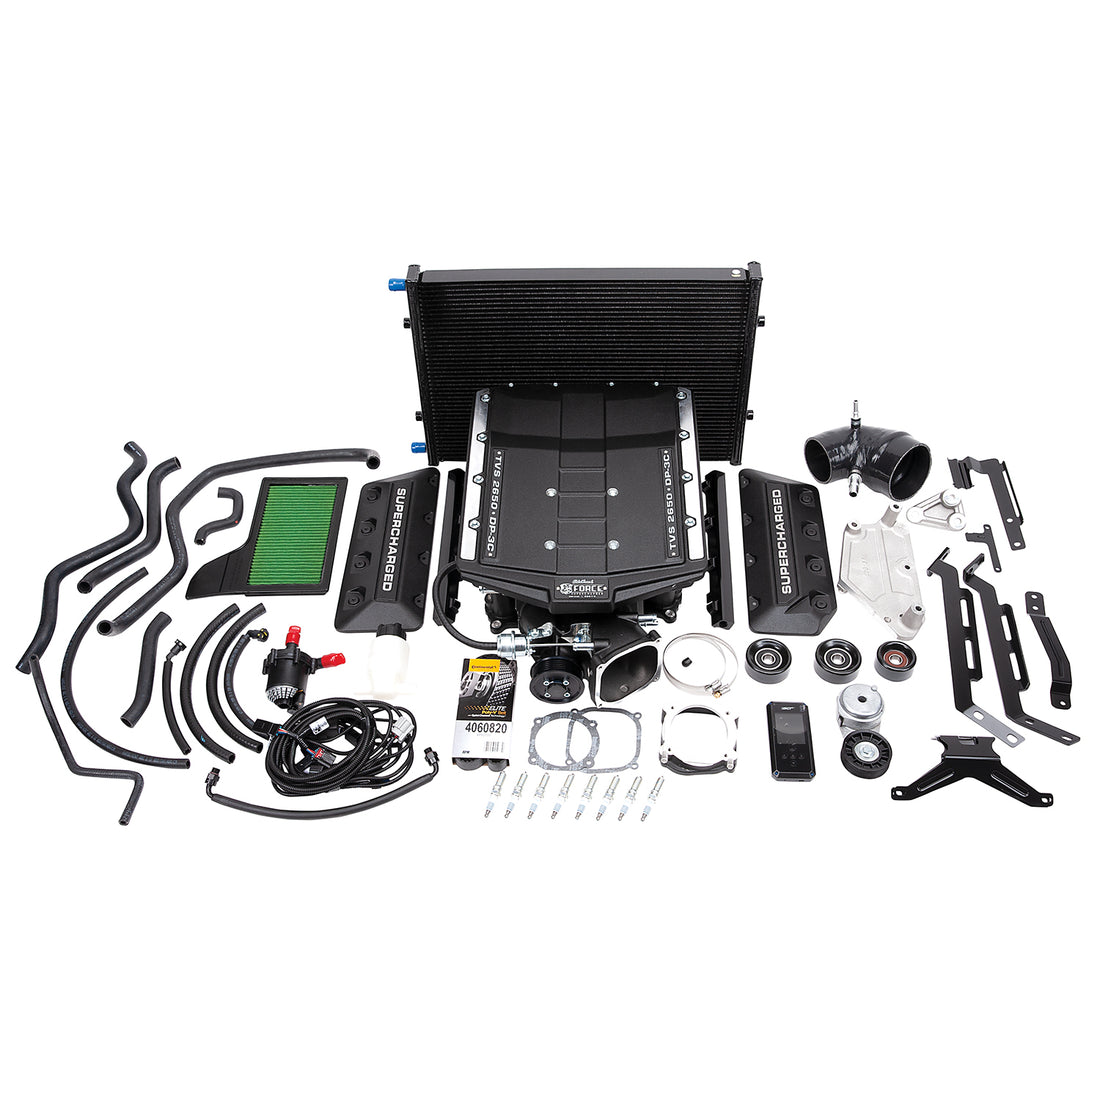 Edelbrock Stage 1 Supercharger Kit #15832 For 2018-21 Ford Mustang 5.0L W/ Tune Edelbrock